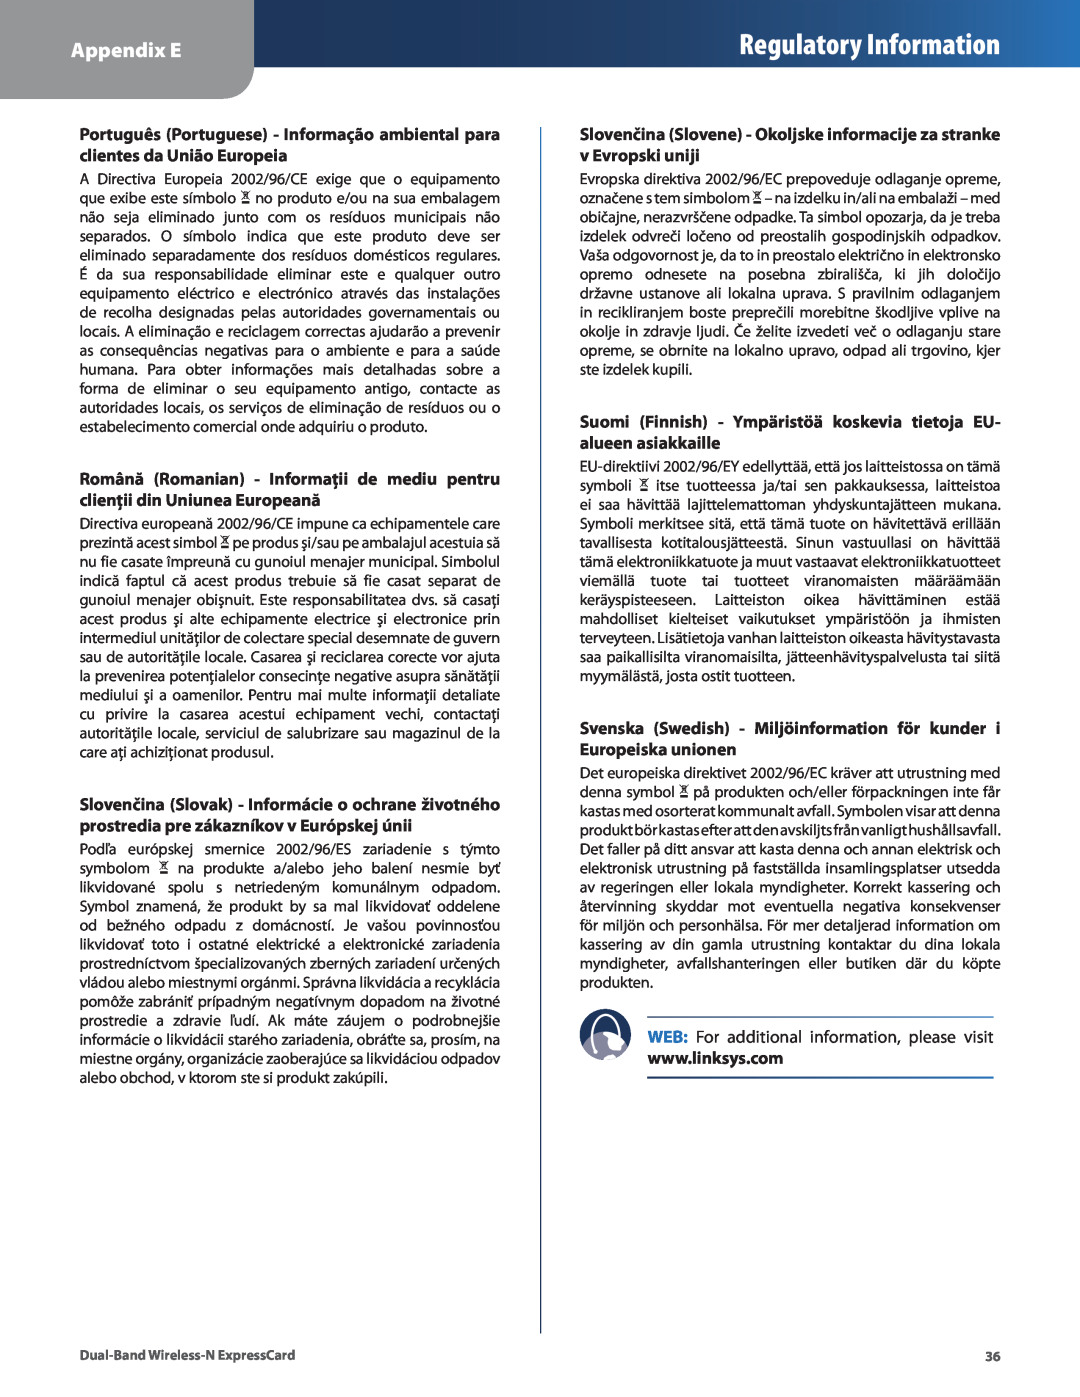 Cisco Systems WEC600N manual Slovenčina Slovene - Okoljske informacije za stranke v Evropski uniji, Regulatory Information 